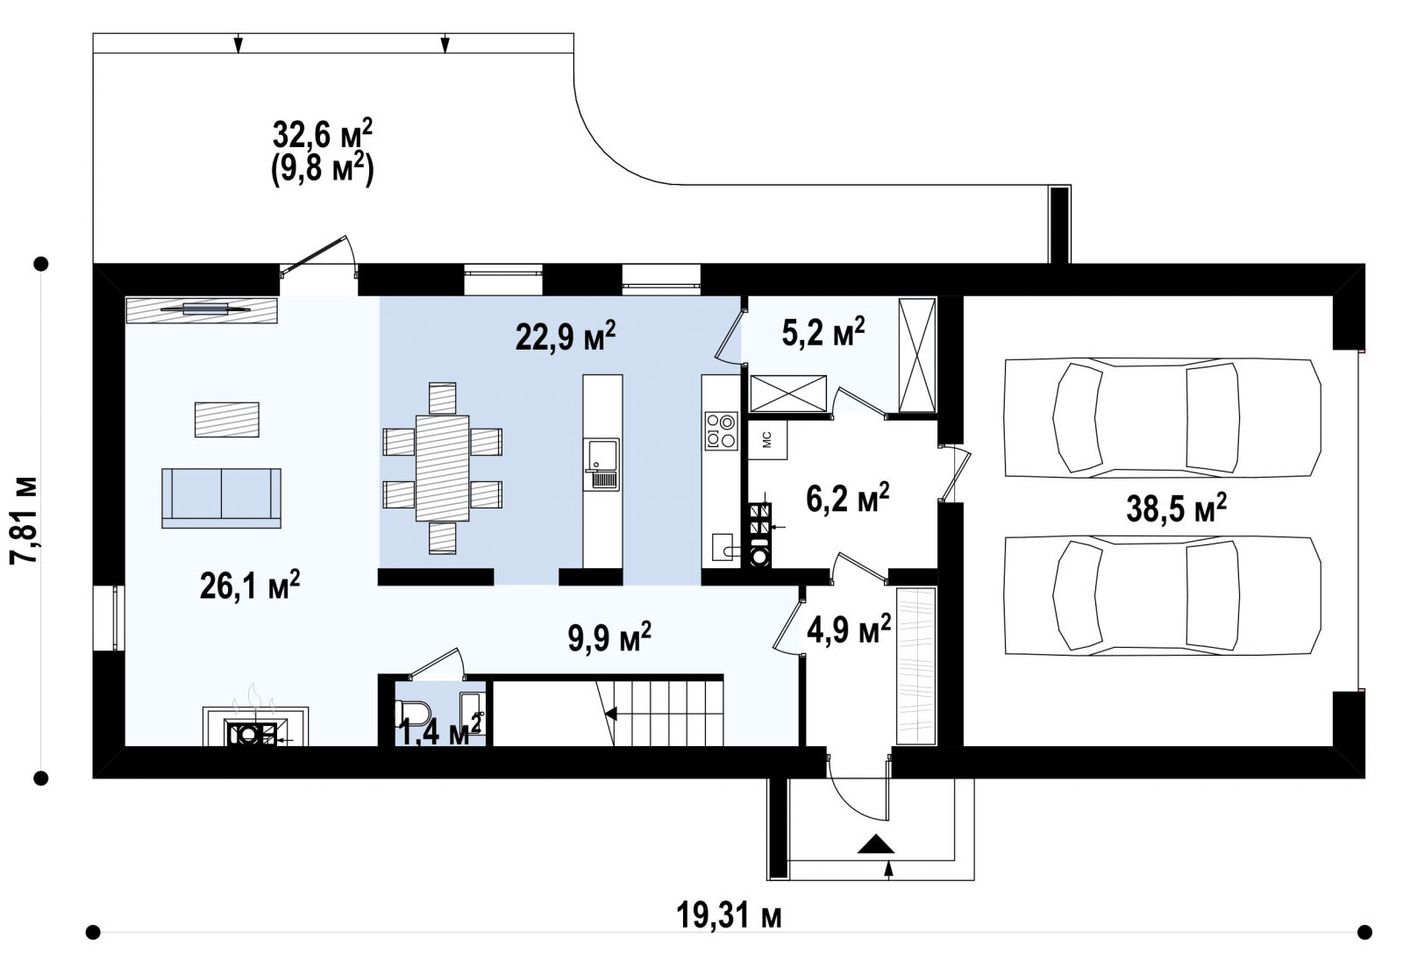 1-ый этаж - план проекта Zx40